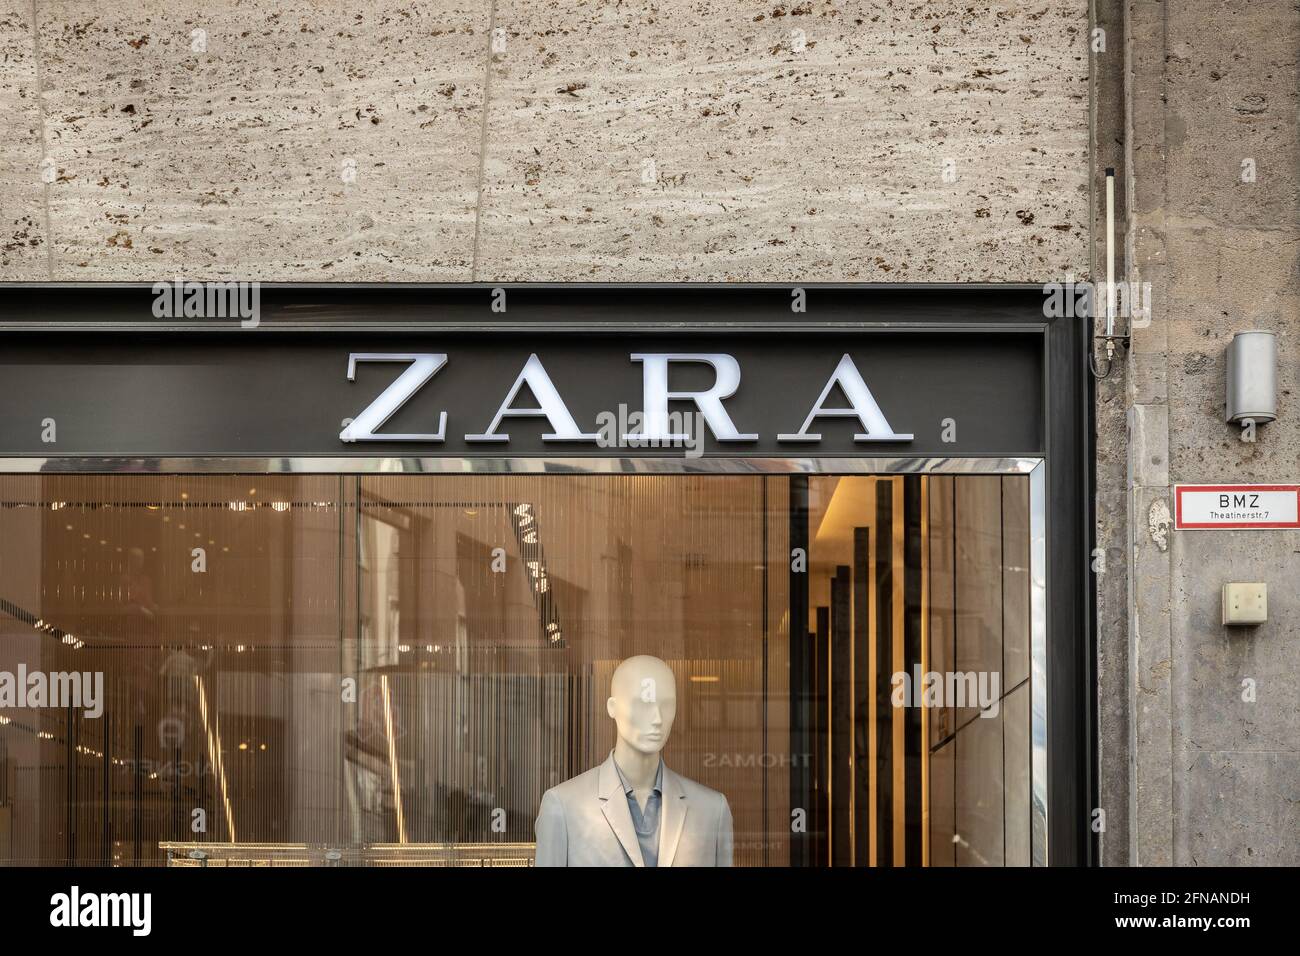 Zara store sign in Munich town center Stock Photo - Alamy